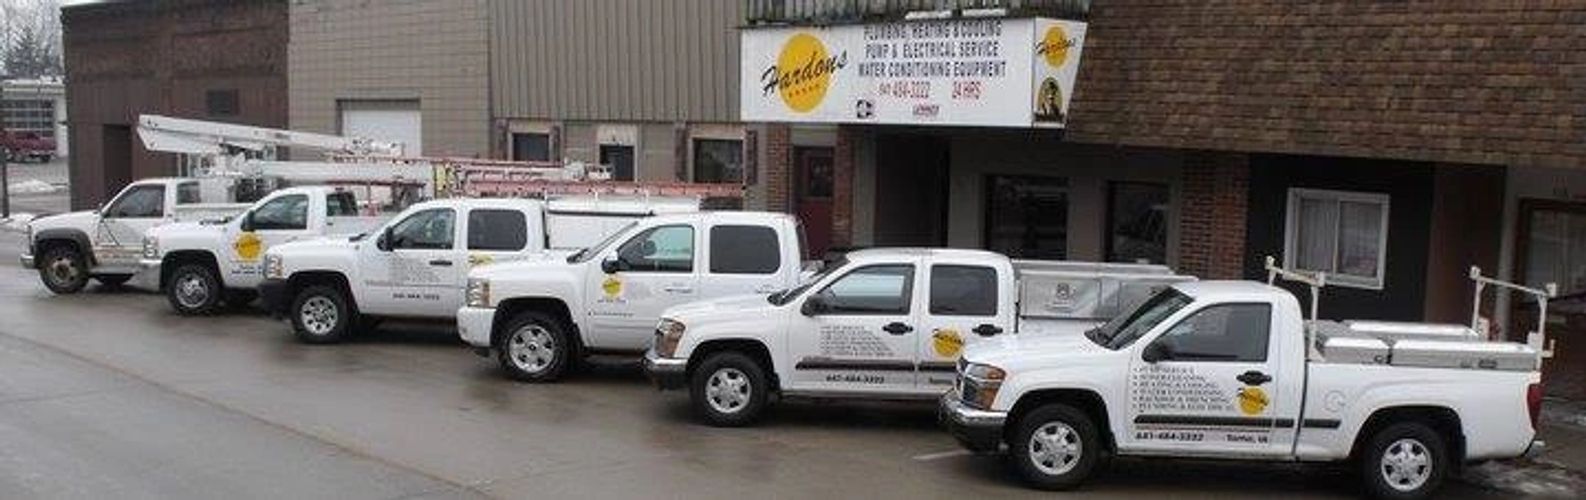 Hardon's storefront and service fleet in downtown Tama, Iowa